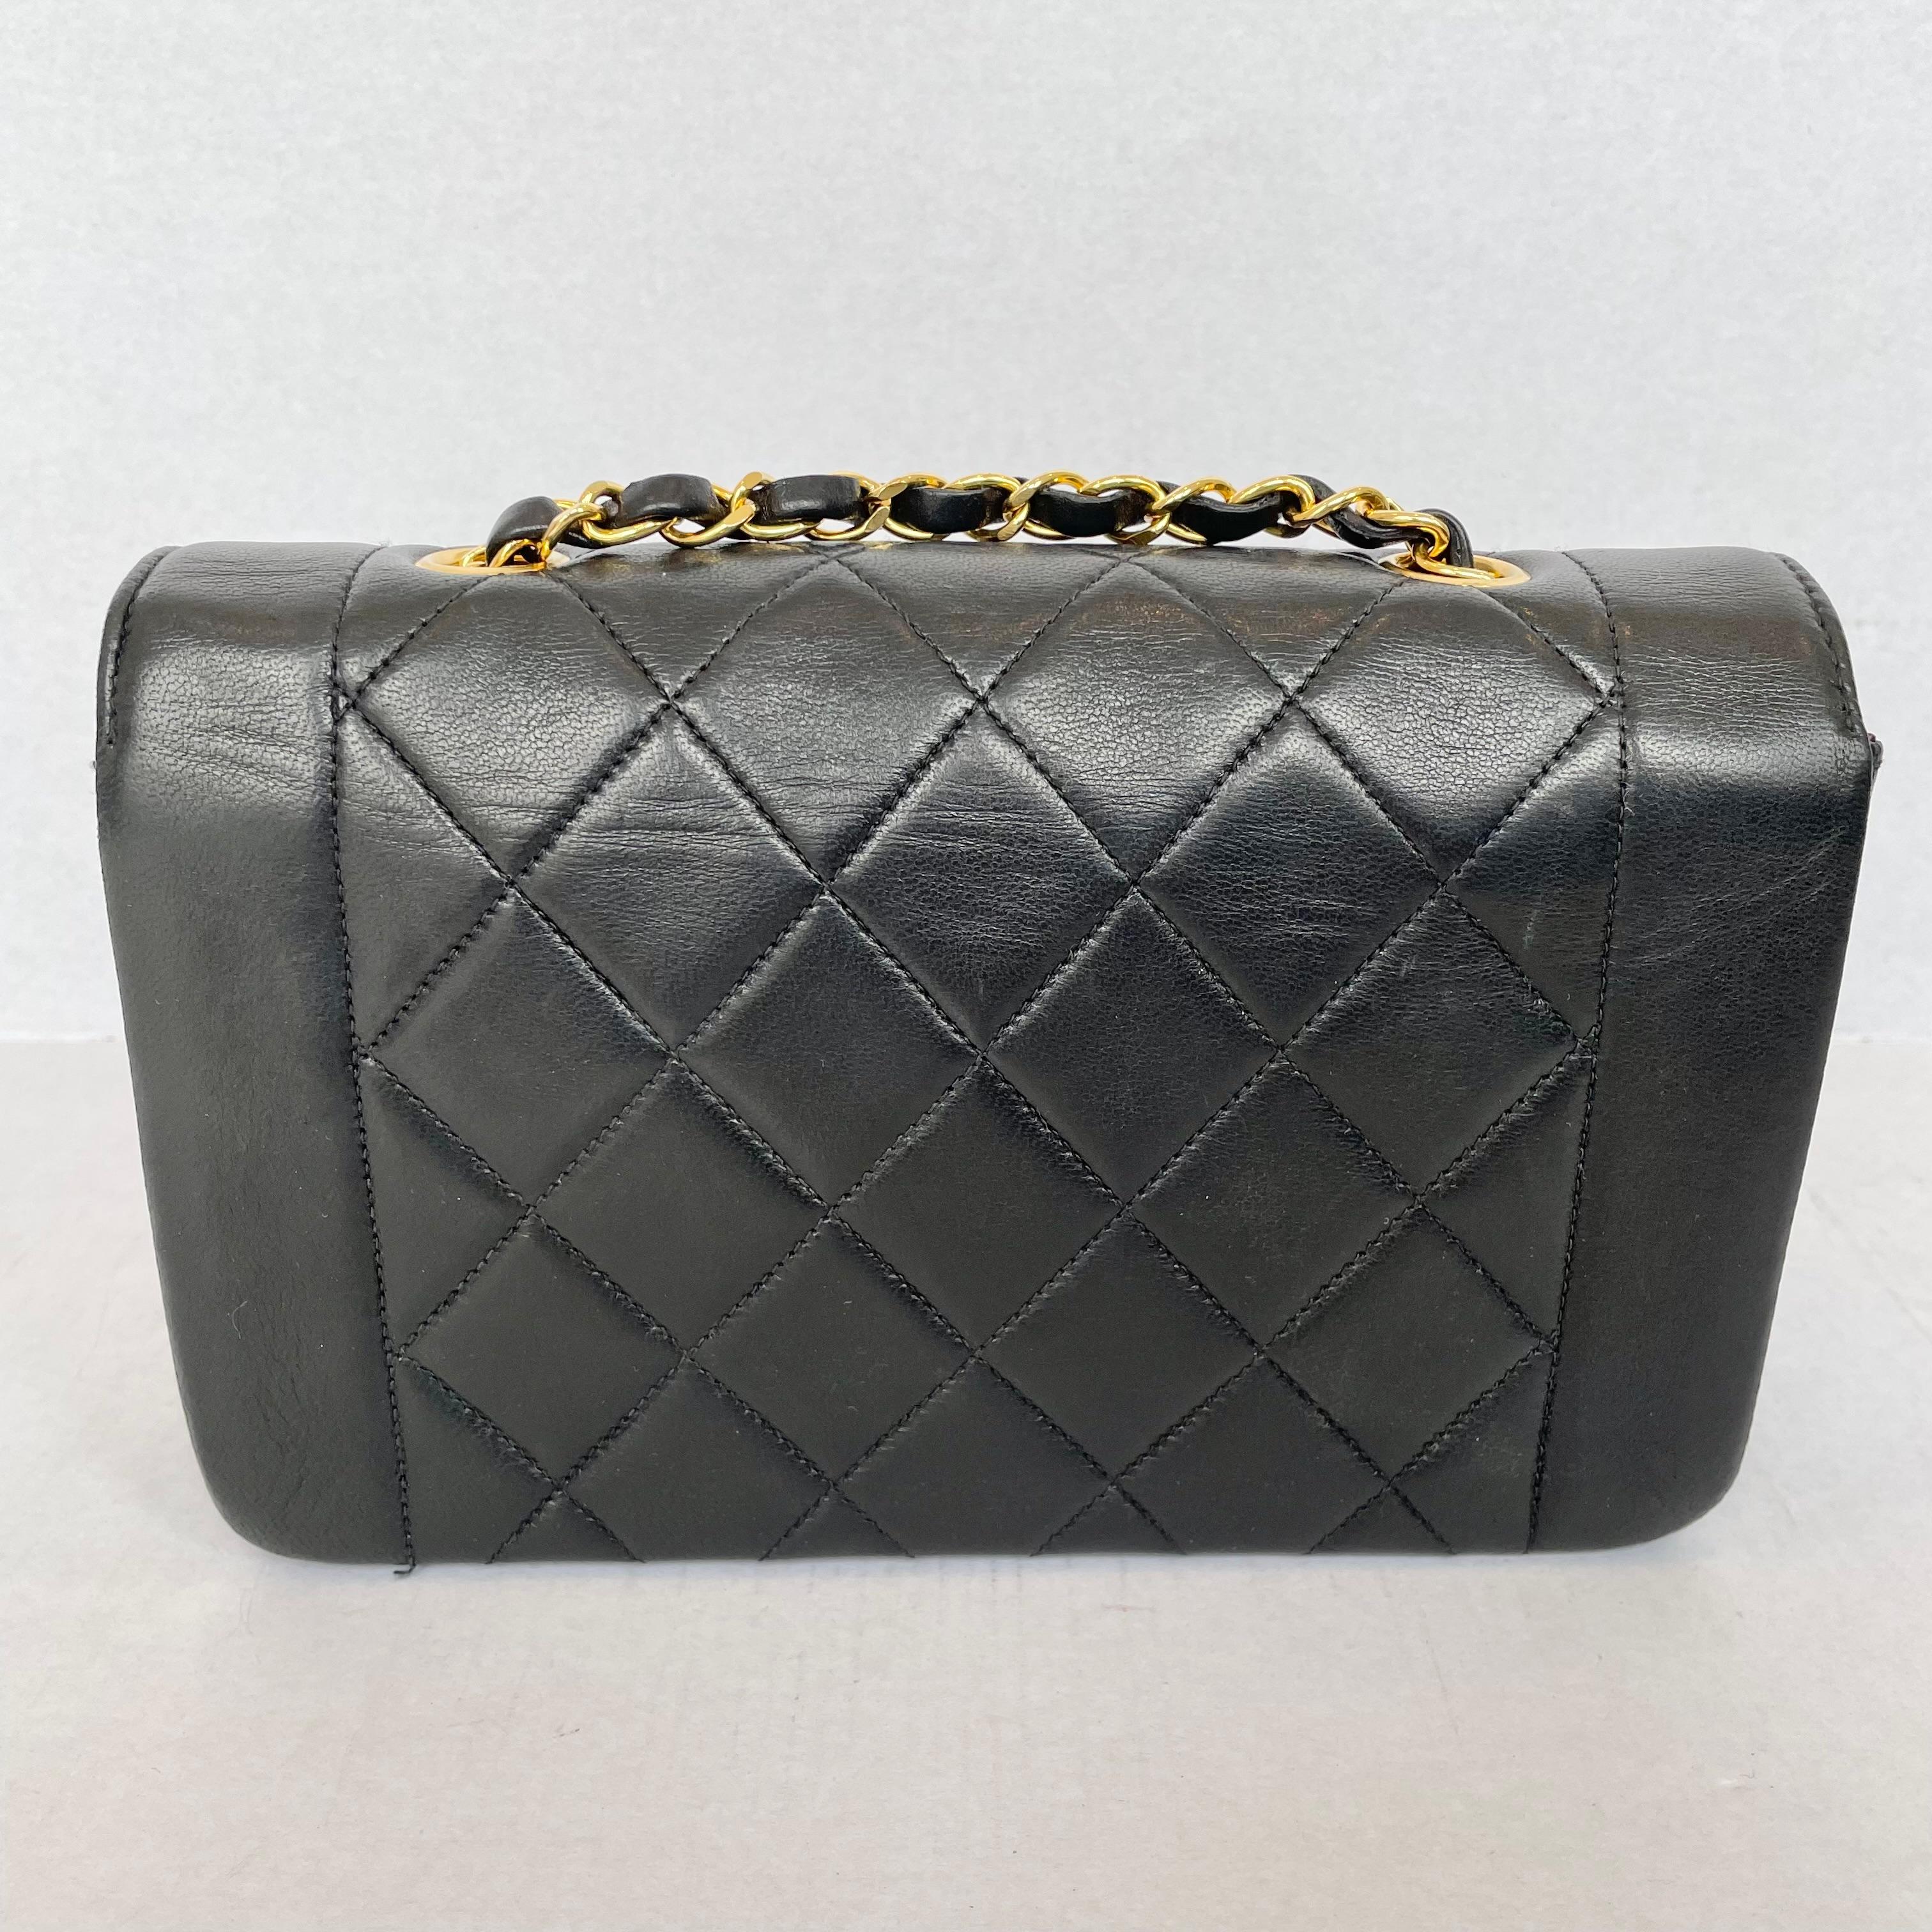 Rare Chanel Diana Shoulder Bag Black Quilted Lambskin Leather, 1990s France For Sale 1